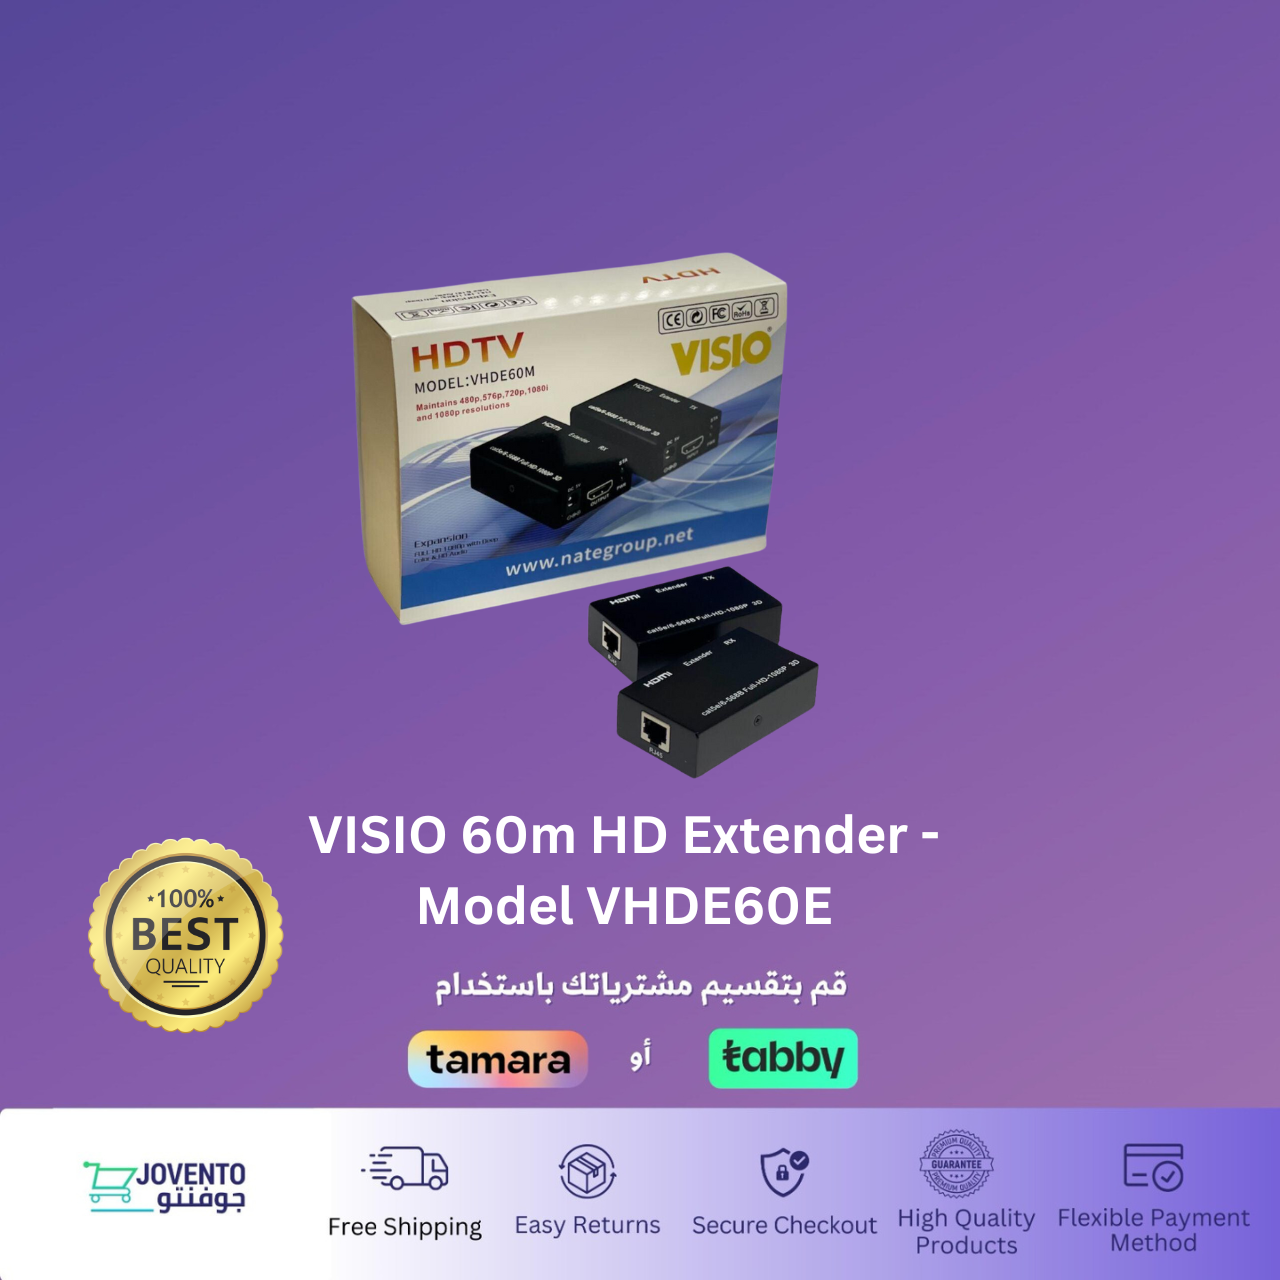 VISIO 60m HD Extender - Model VHDE60E